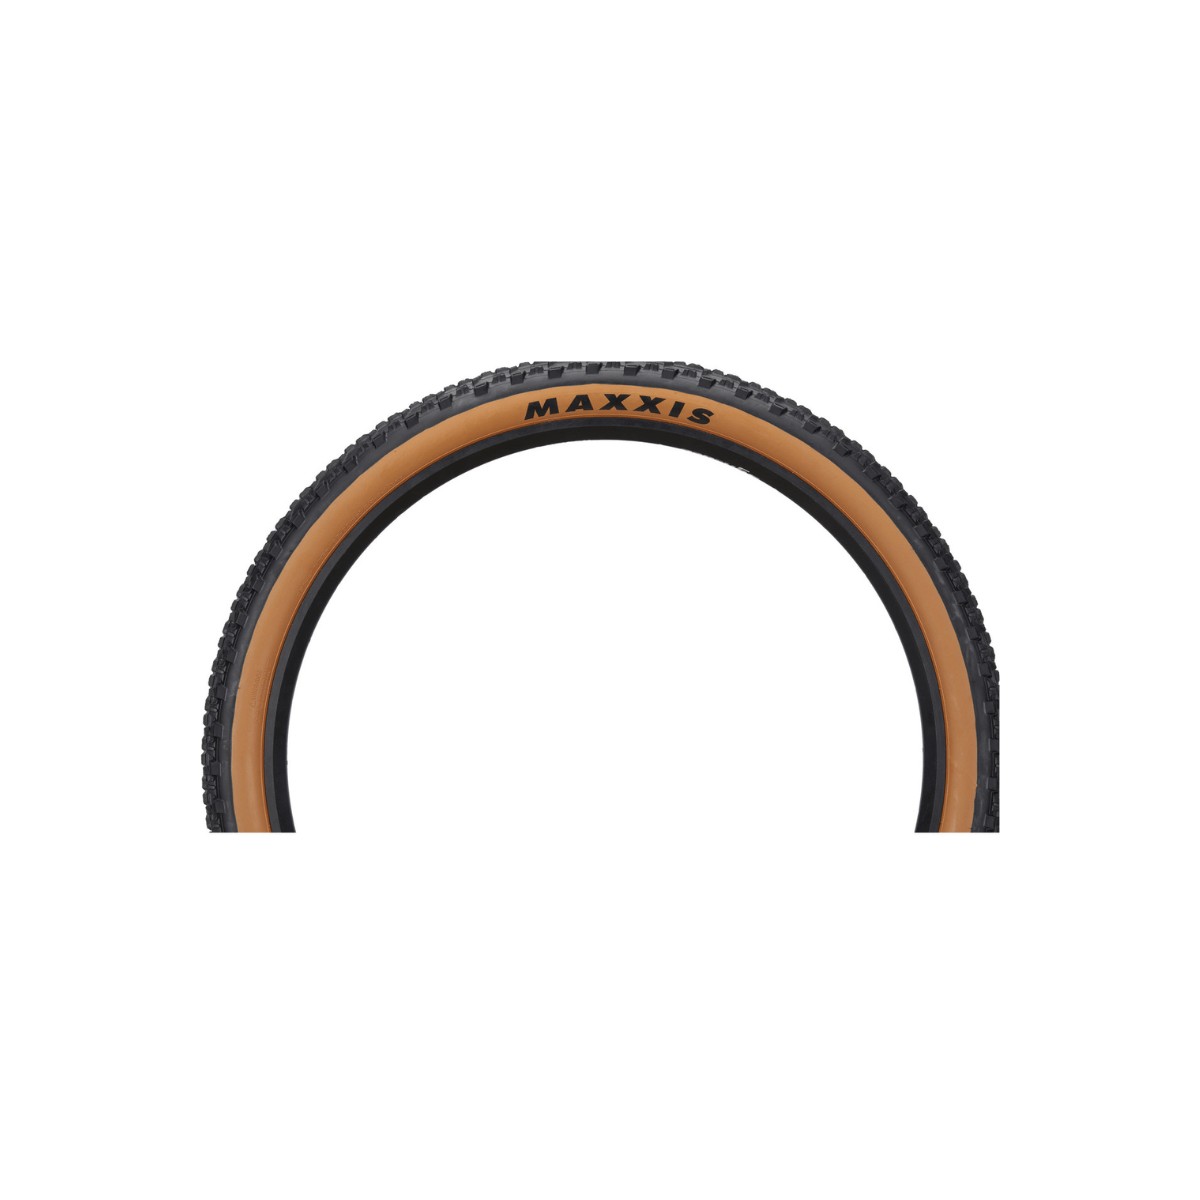 Maxxis Ardent 29x2.25 EXO Tubeless Ready Skinwall Tire